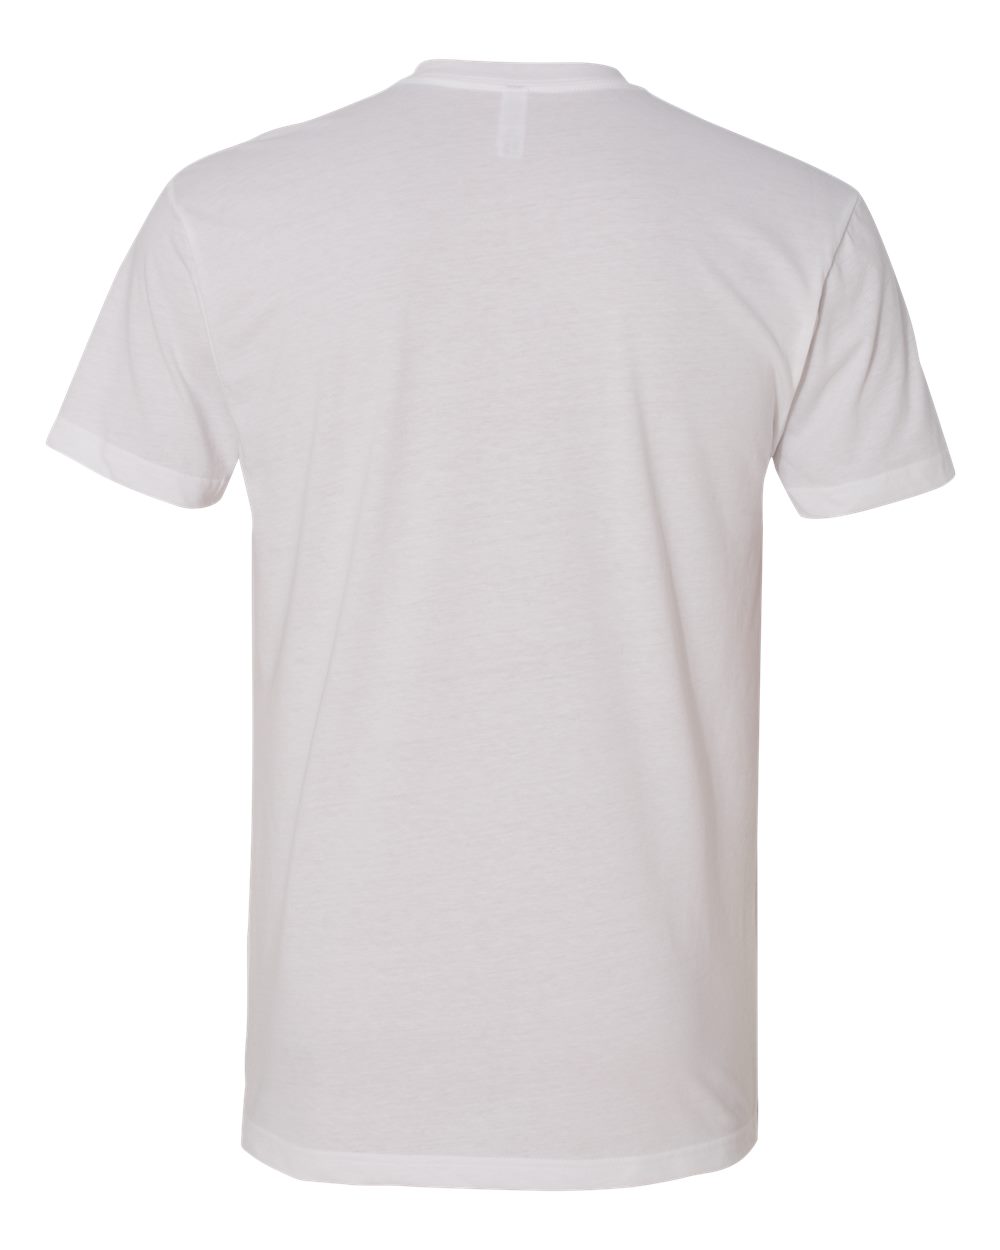 Next Level Apparel® 6410 Unisex Sueded T-Shirt - Wholesale Apparel